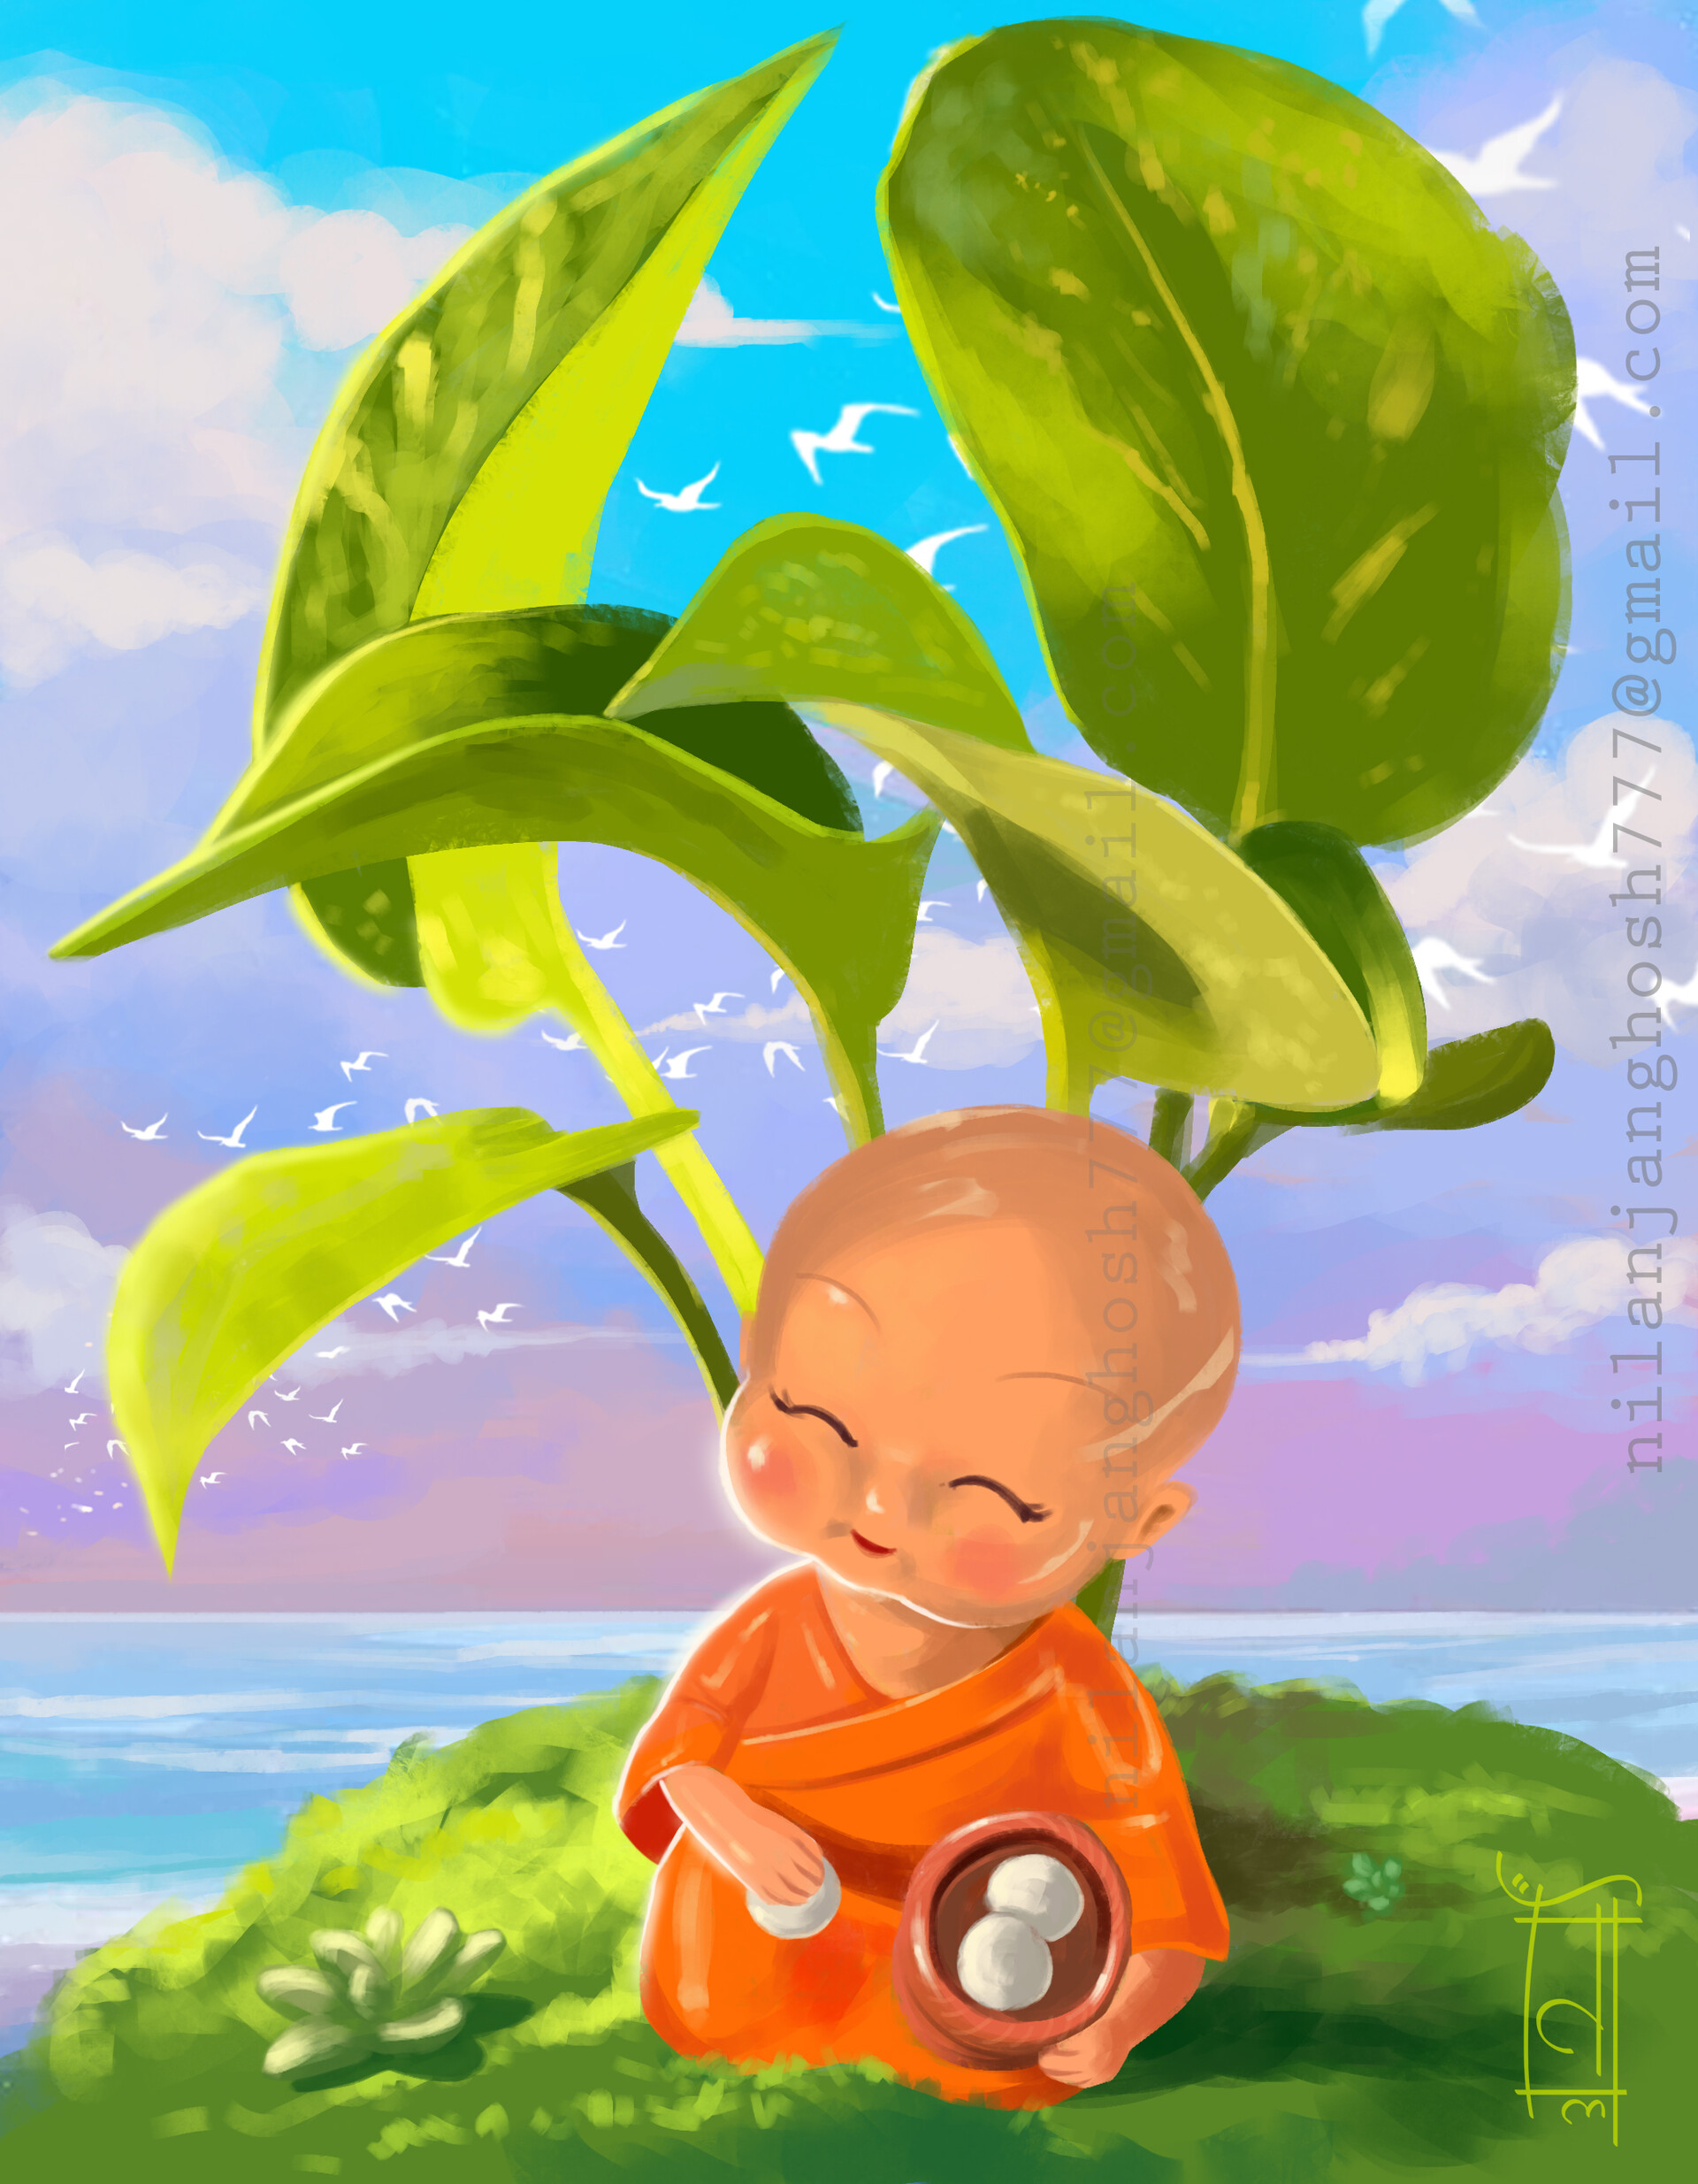 baby buddha drawing